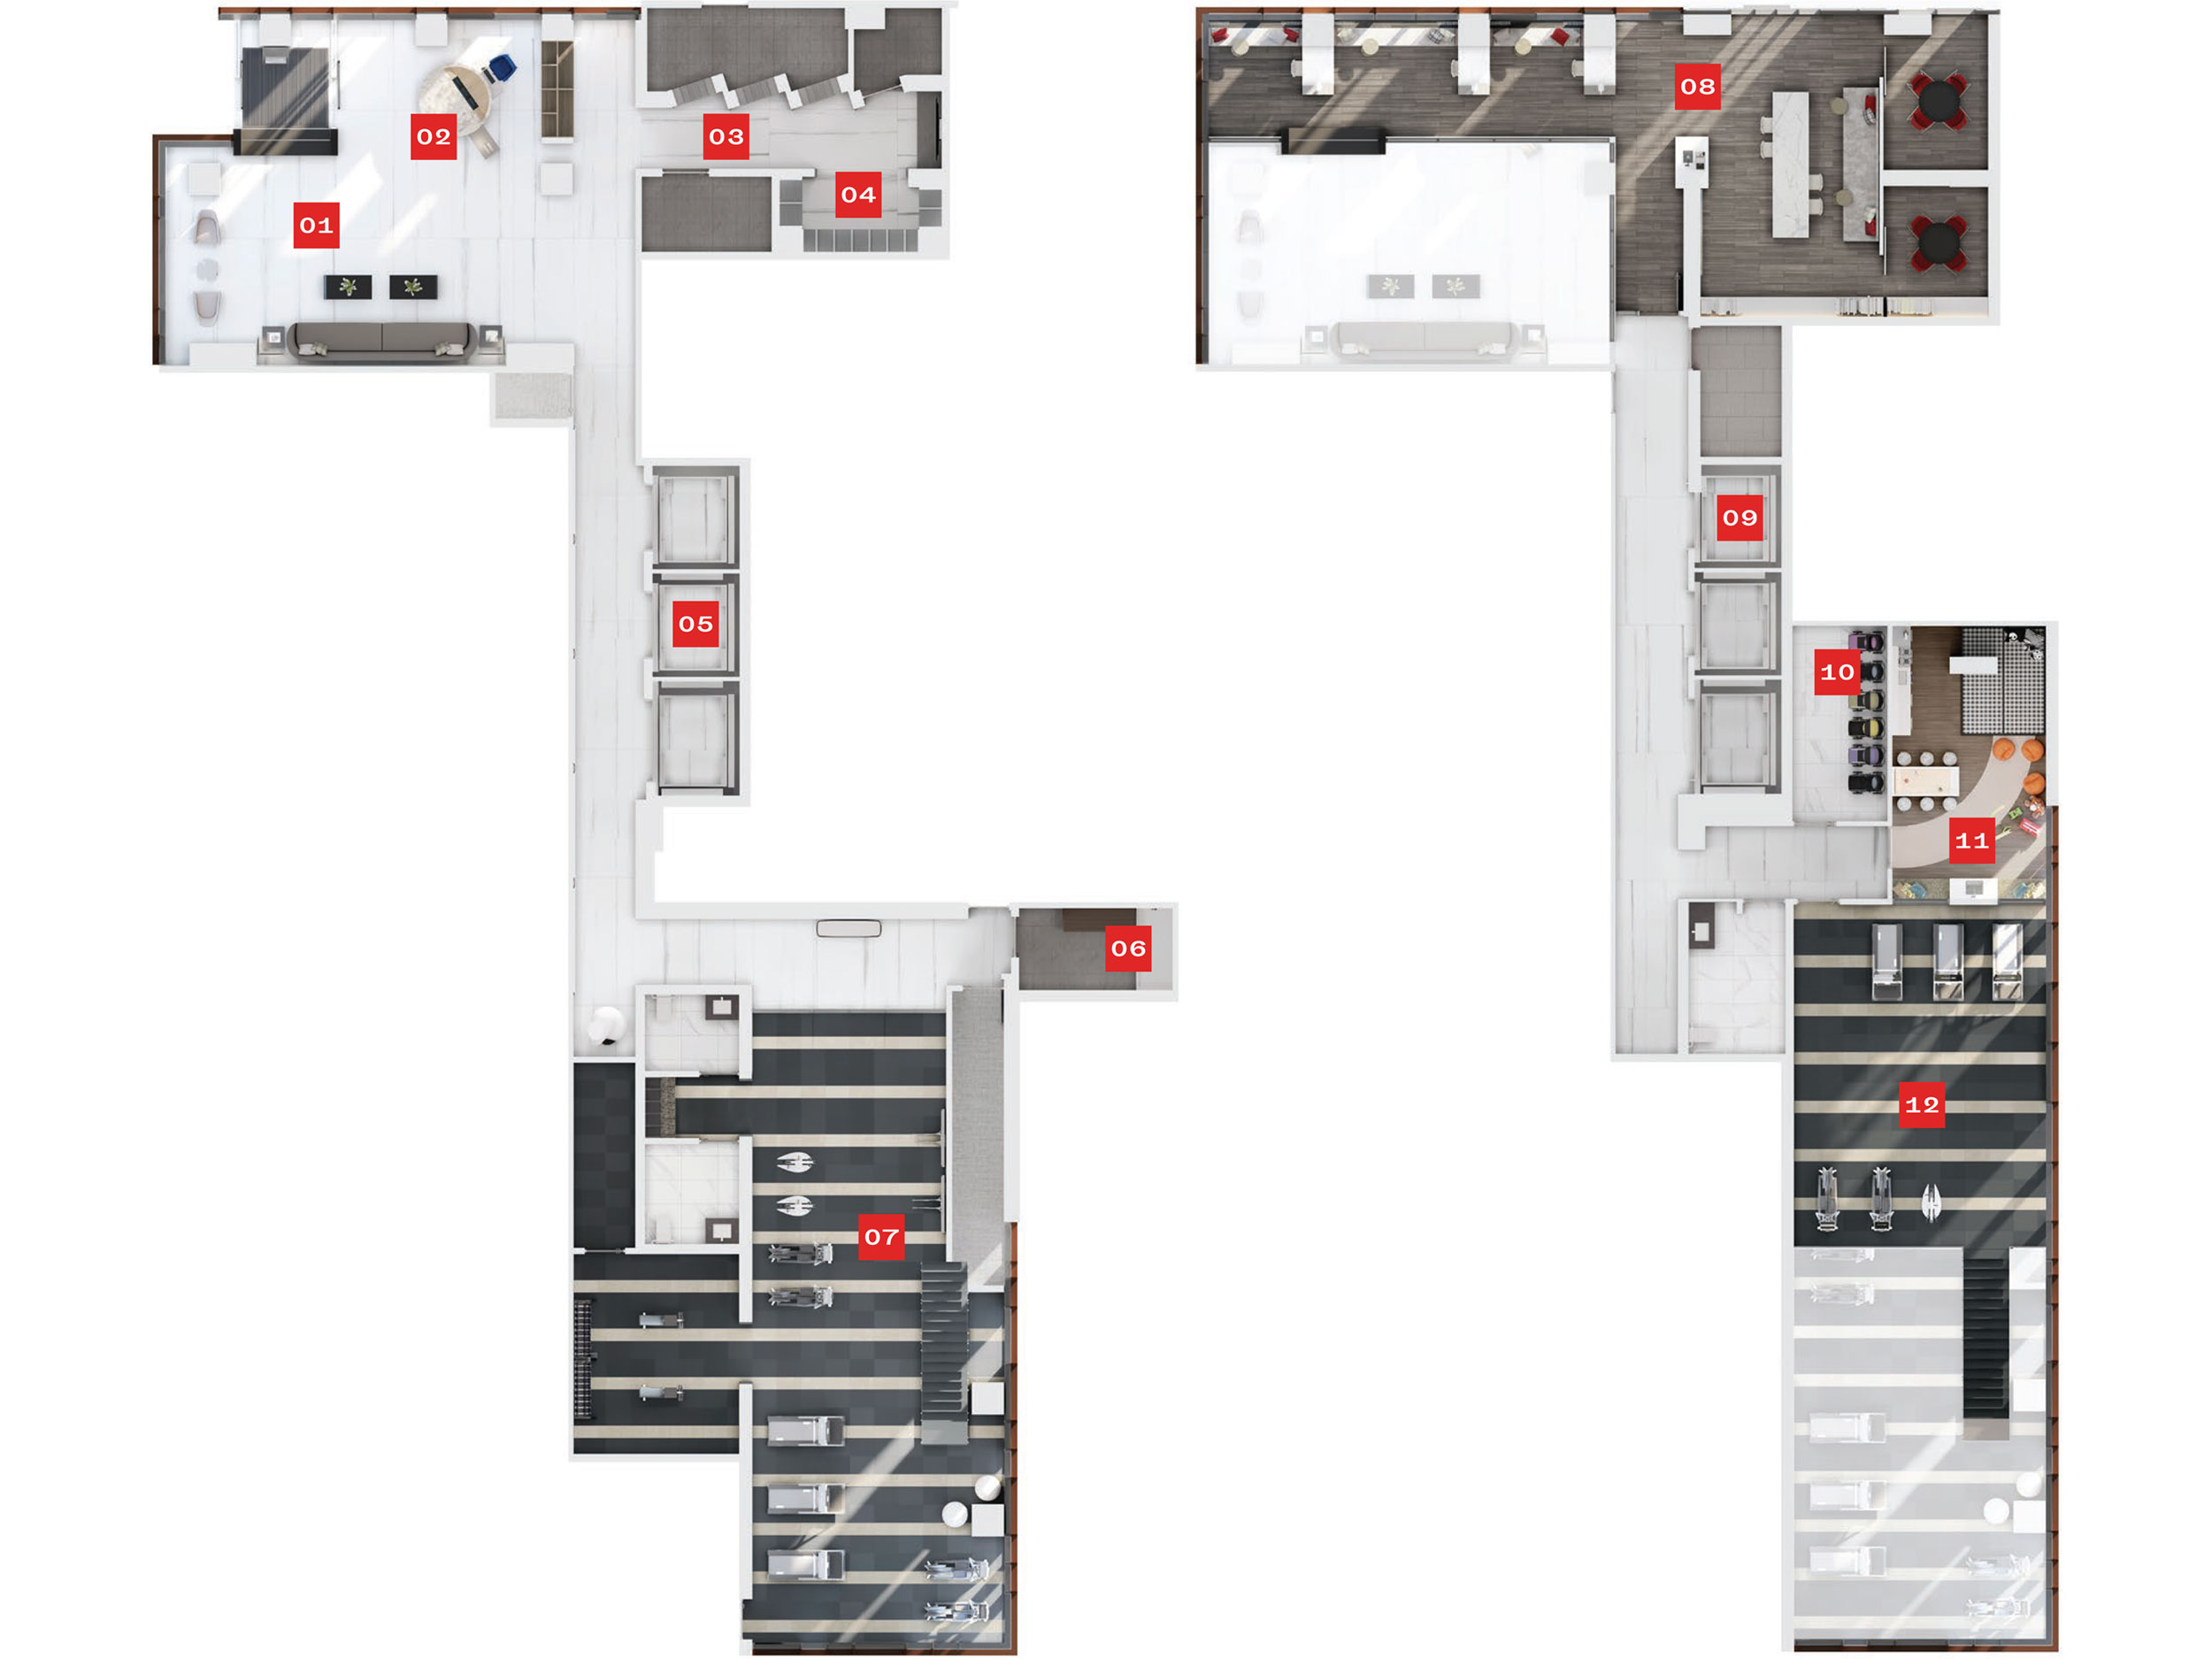 MRKT Alexandra Park 1st & 2nd Floor Amenity Plan